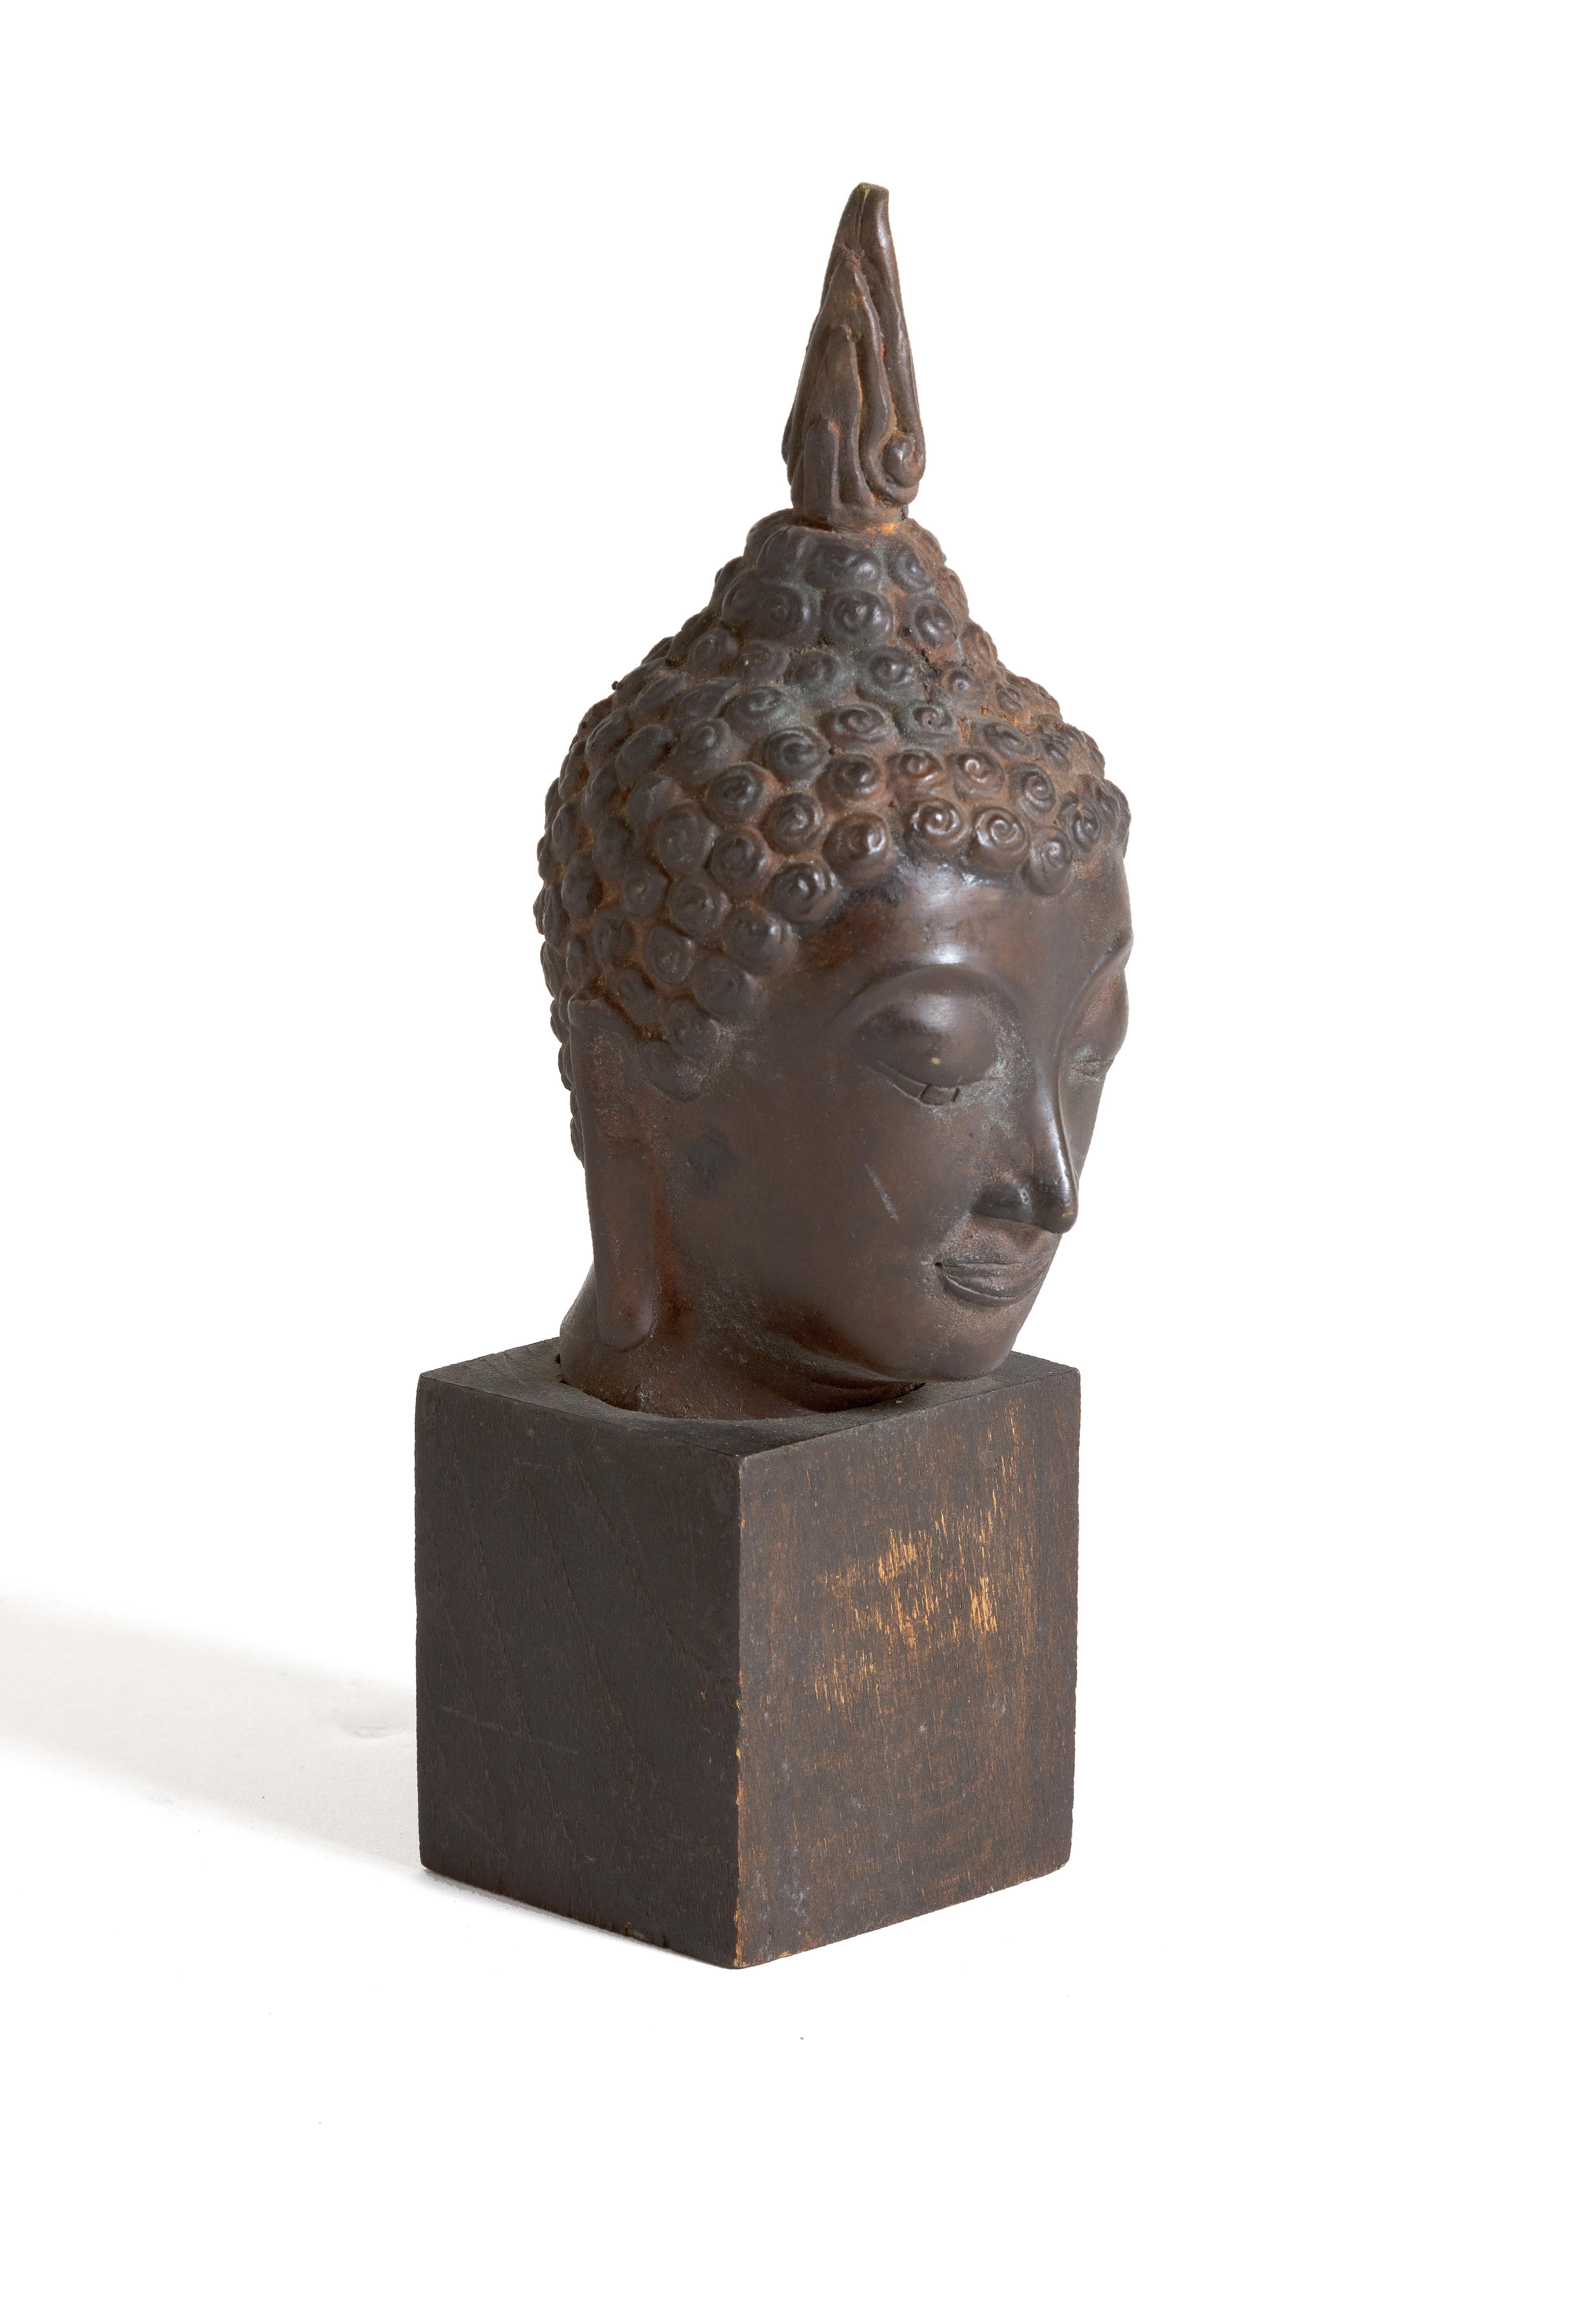 Tête de Bouddha en bronze de Birmanie, Thaïlande (original) - Sculpture de Unknown